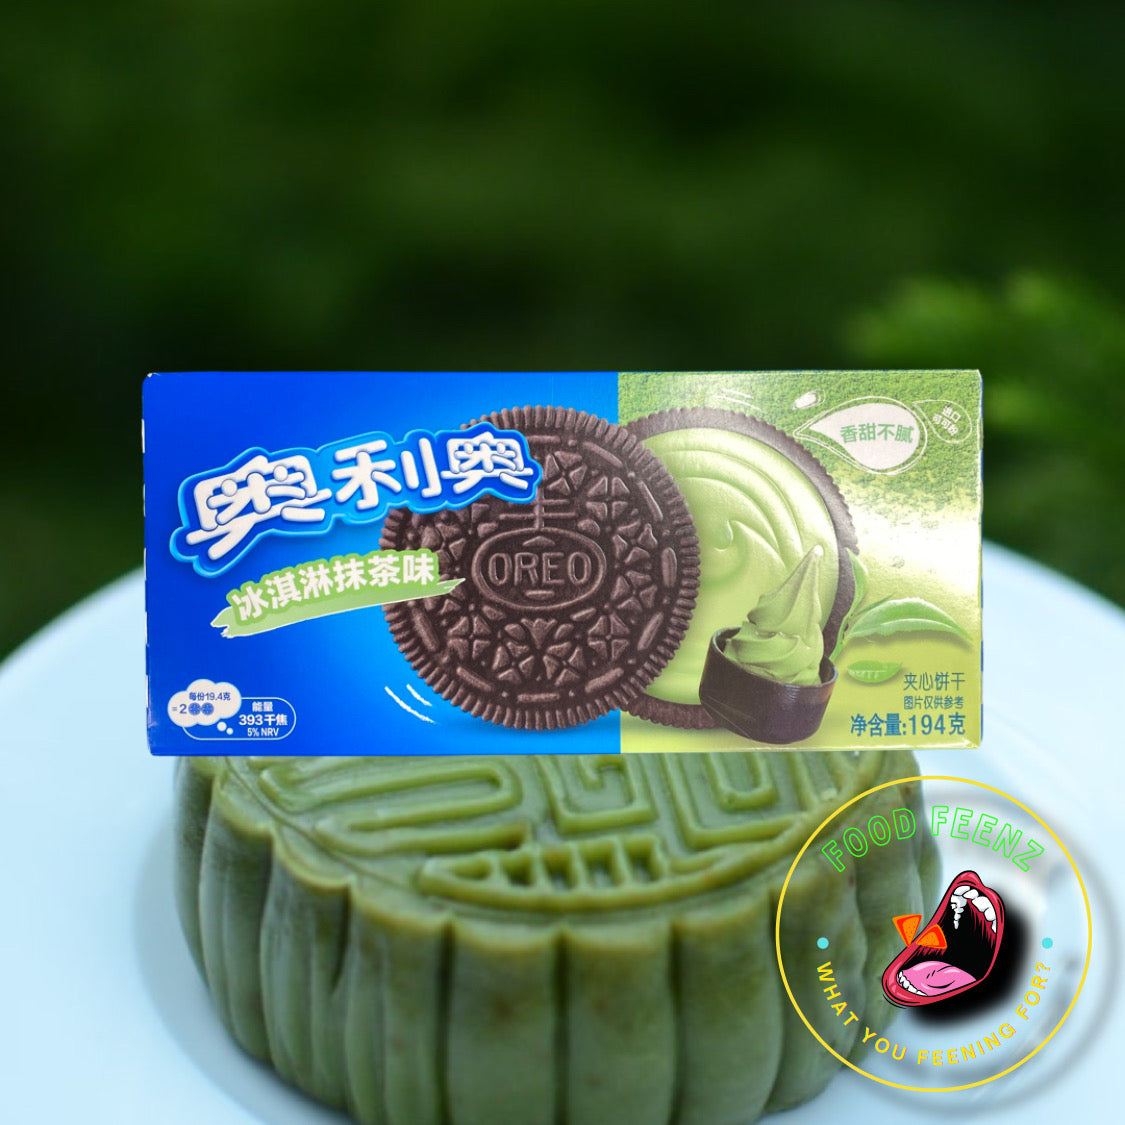 Oreo Ice cream Matcha Flavor (China)